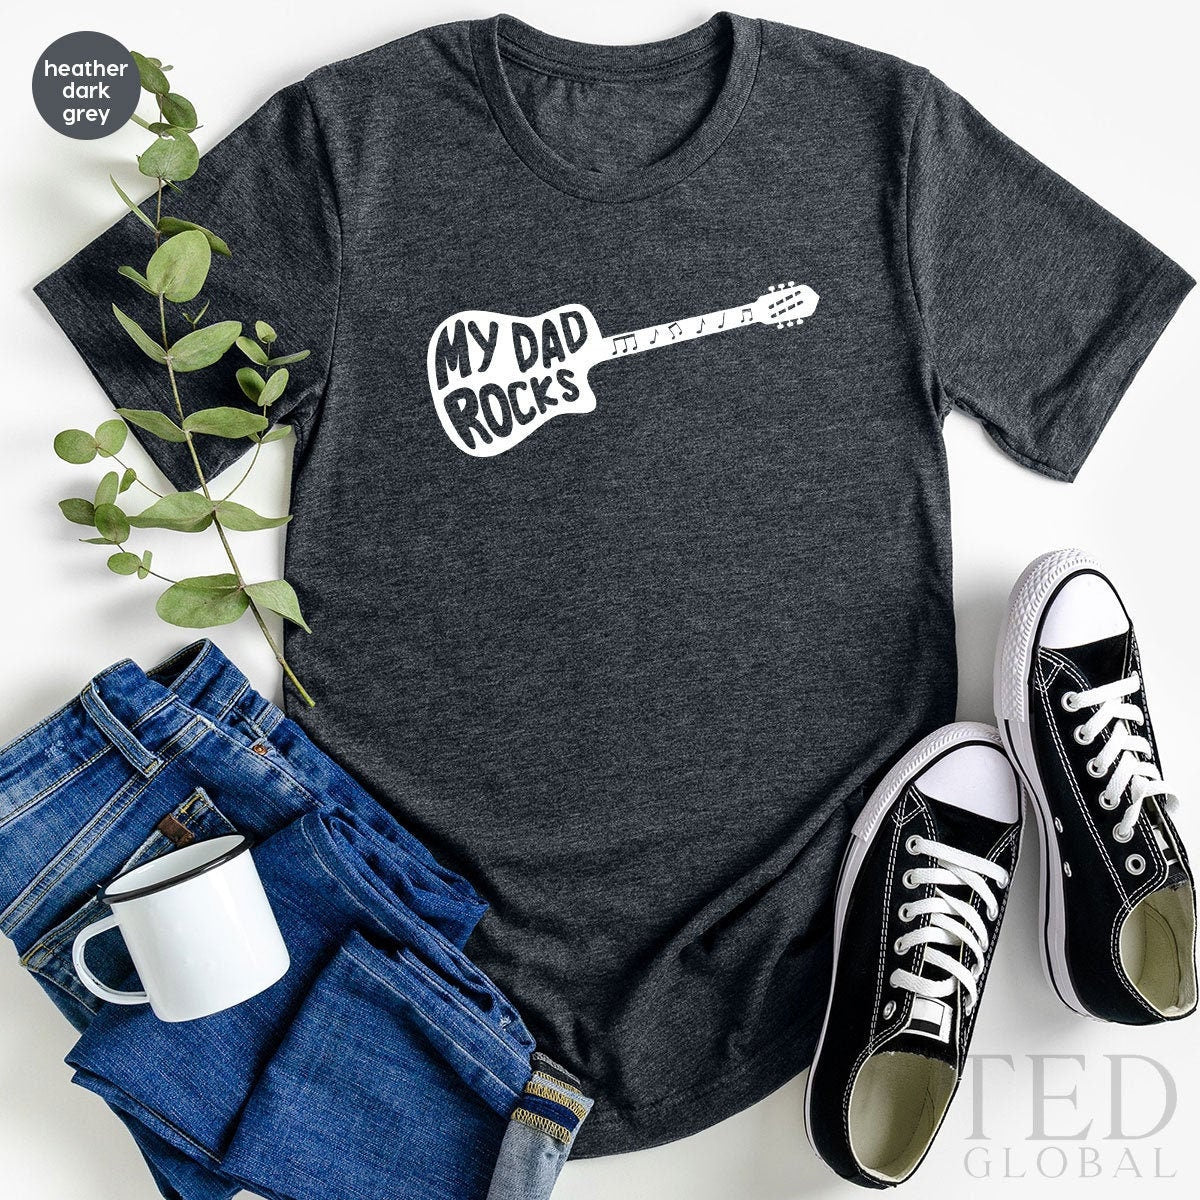 Funny Dad Shirt, Guitar Dad Shirt, Fathers Day TShirt, Musical Dad Shirt, Guitar Shirt, My Dad Rocks Shirt, Best Dad T Shirt, Guitar Player - Fastdeliverytees.com